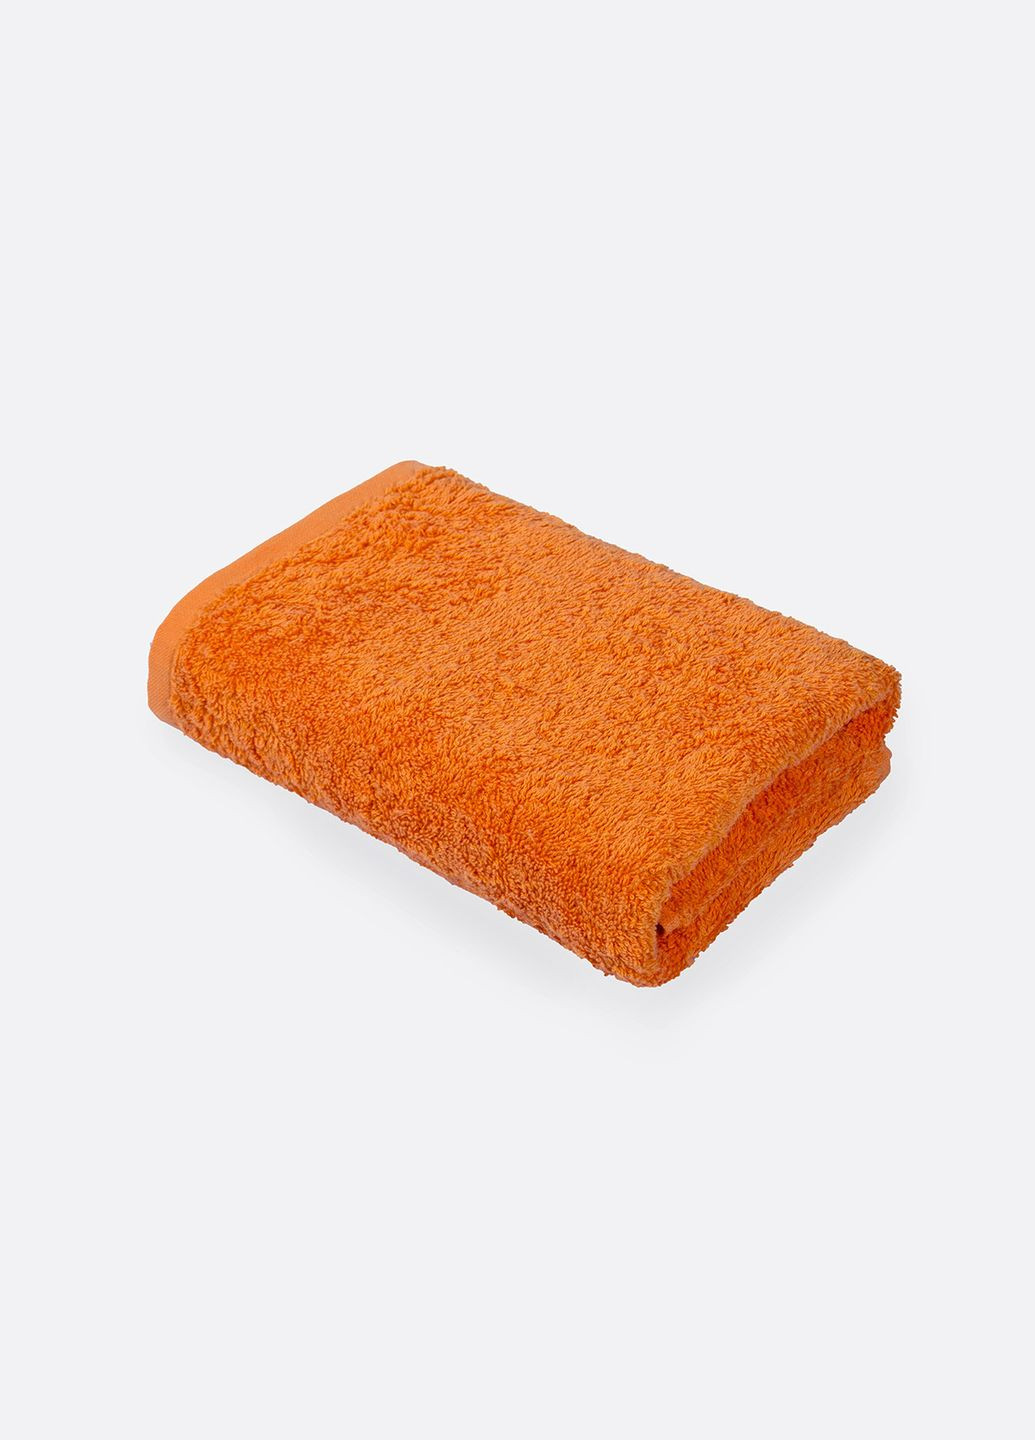 Iris Home полотенце отель - persmon orange 50*90 440 г/м2 оранжевый производство -